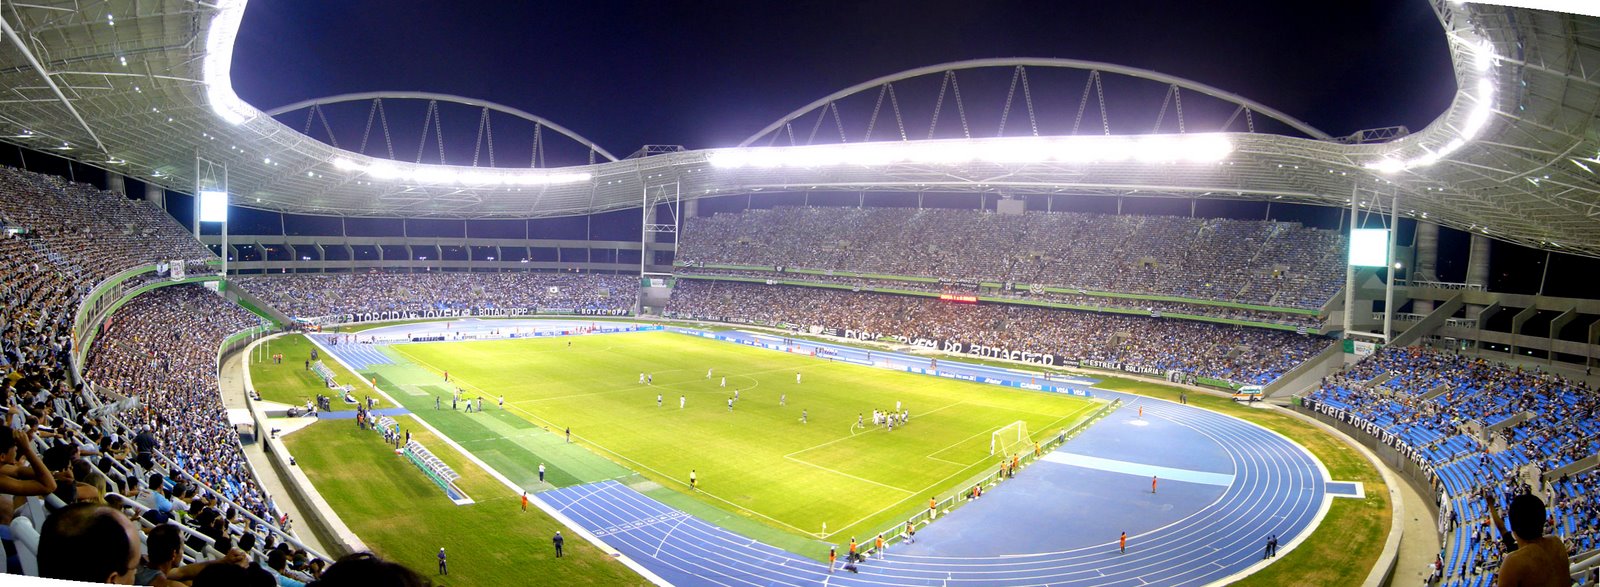 João Havelange Stadium